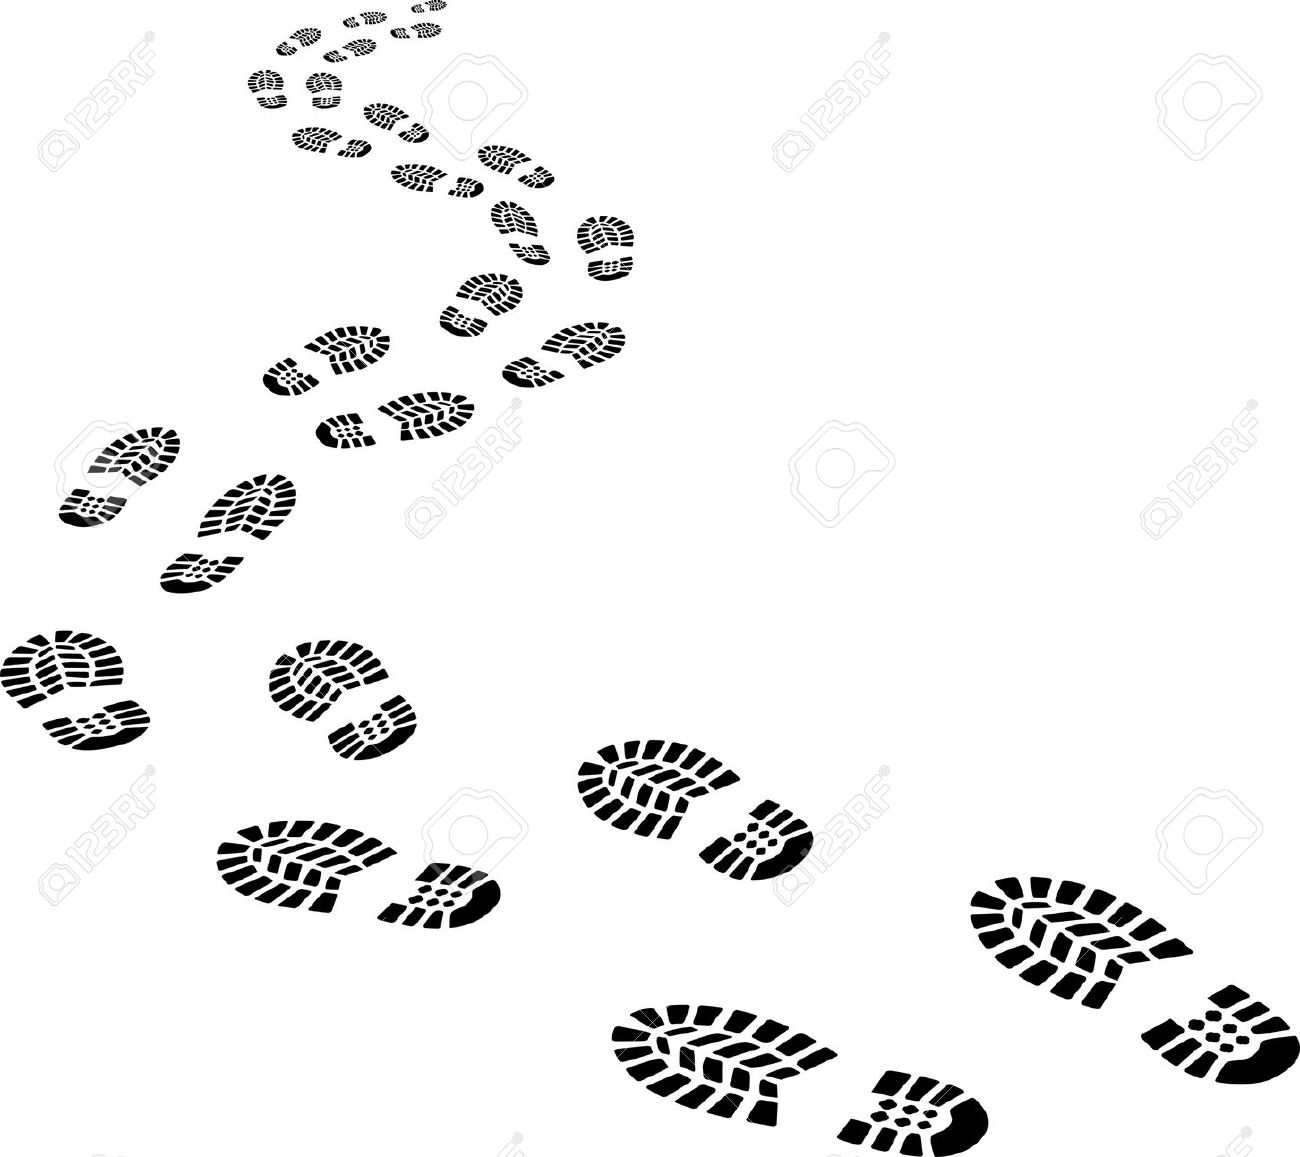 figs/the-web/footprints-2.jpg